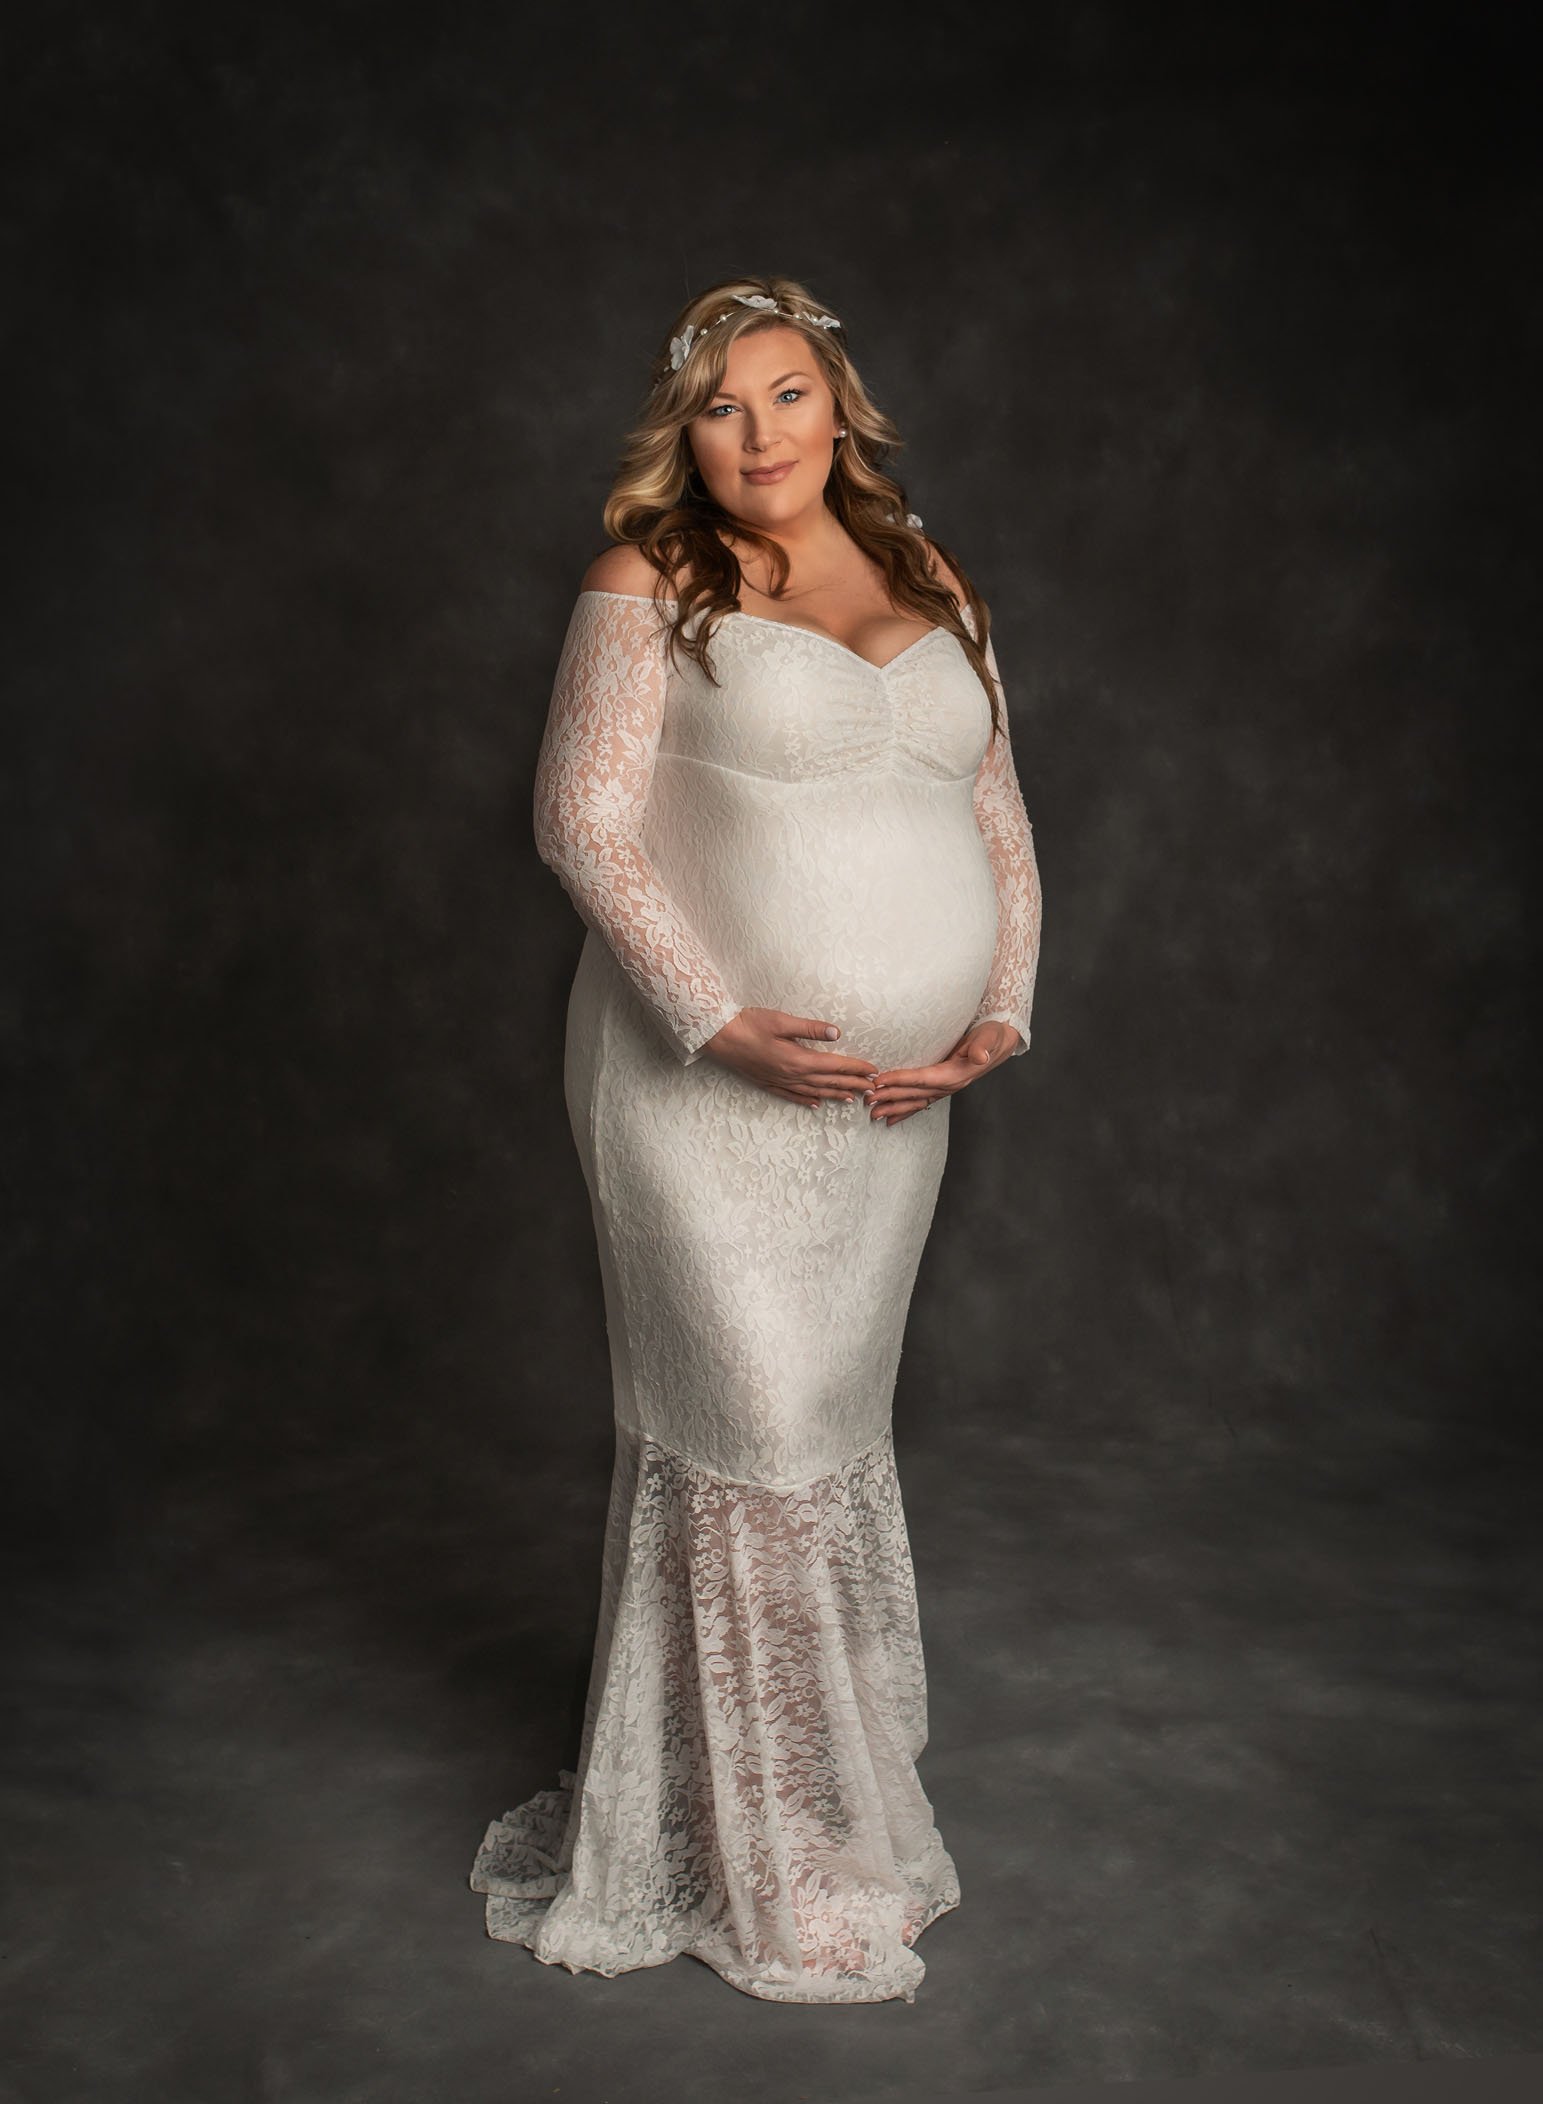 Holly ~ Dramatic Studio Maternity Portraits | One Big Happy Photo